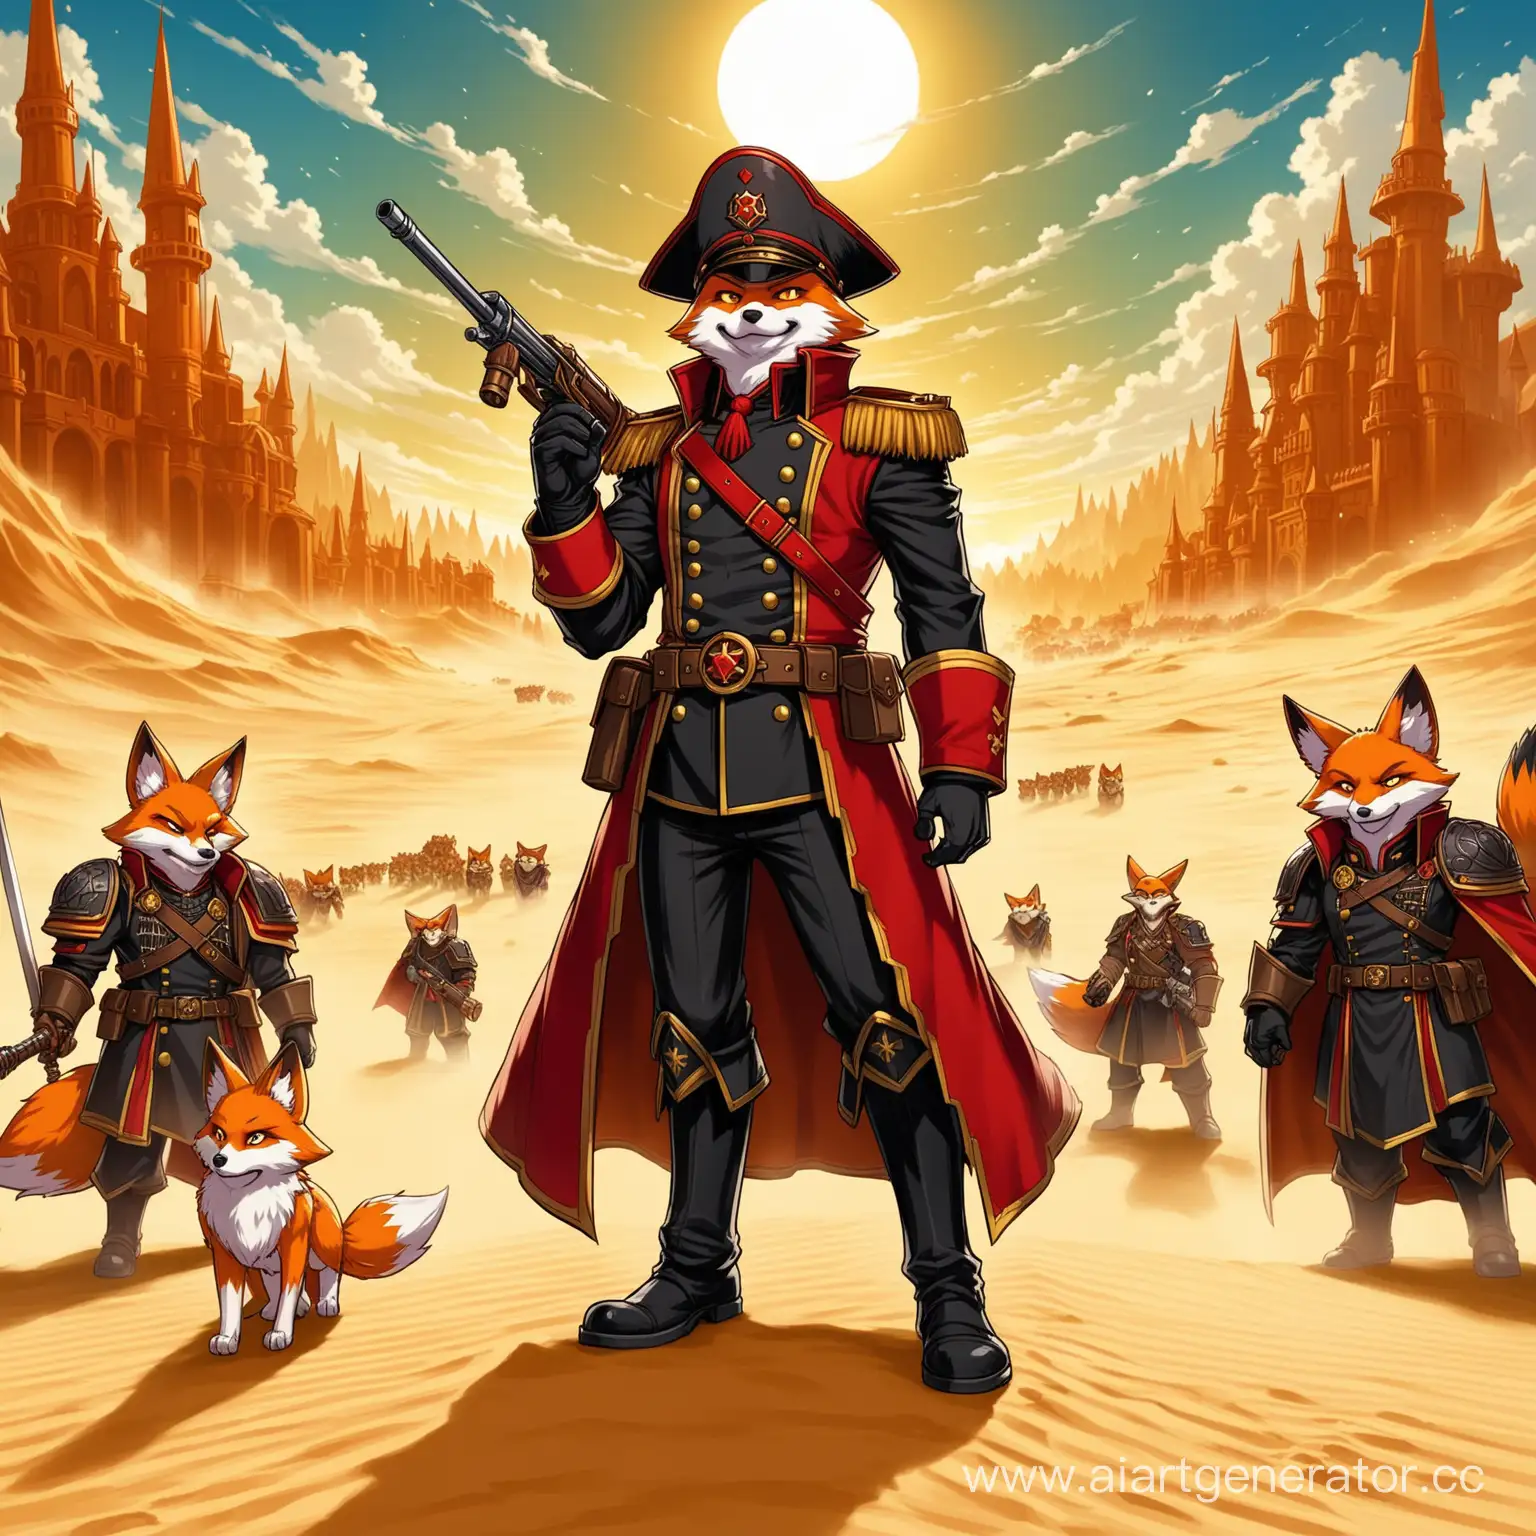 Vulpera-Warhammer-Commissar-Fox-with-Anime-Style-in-War-Setting